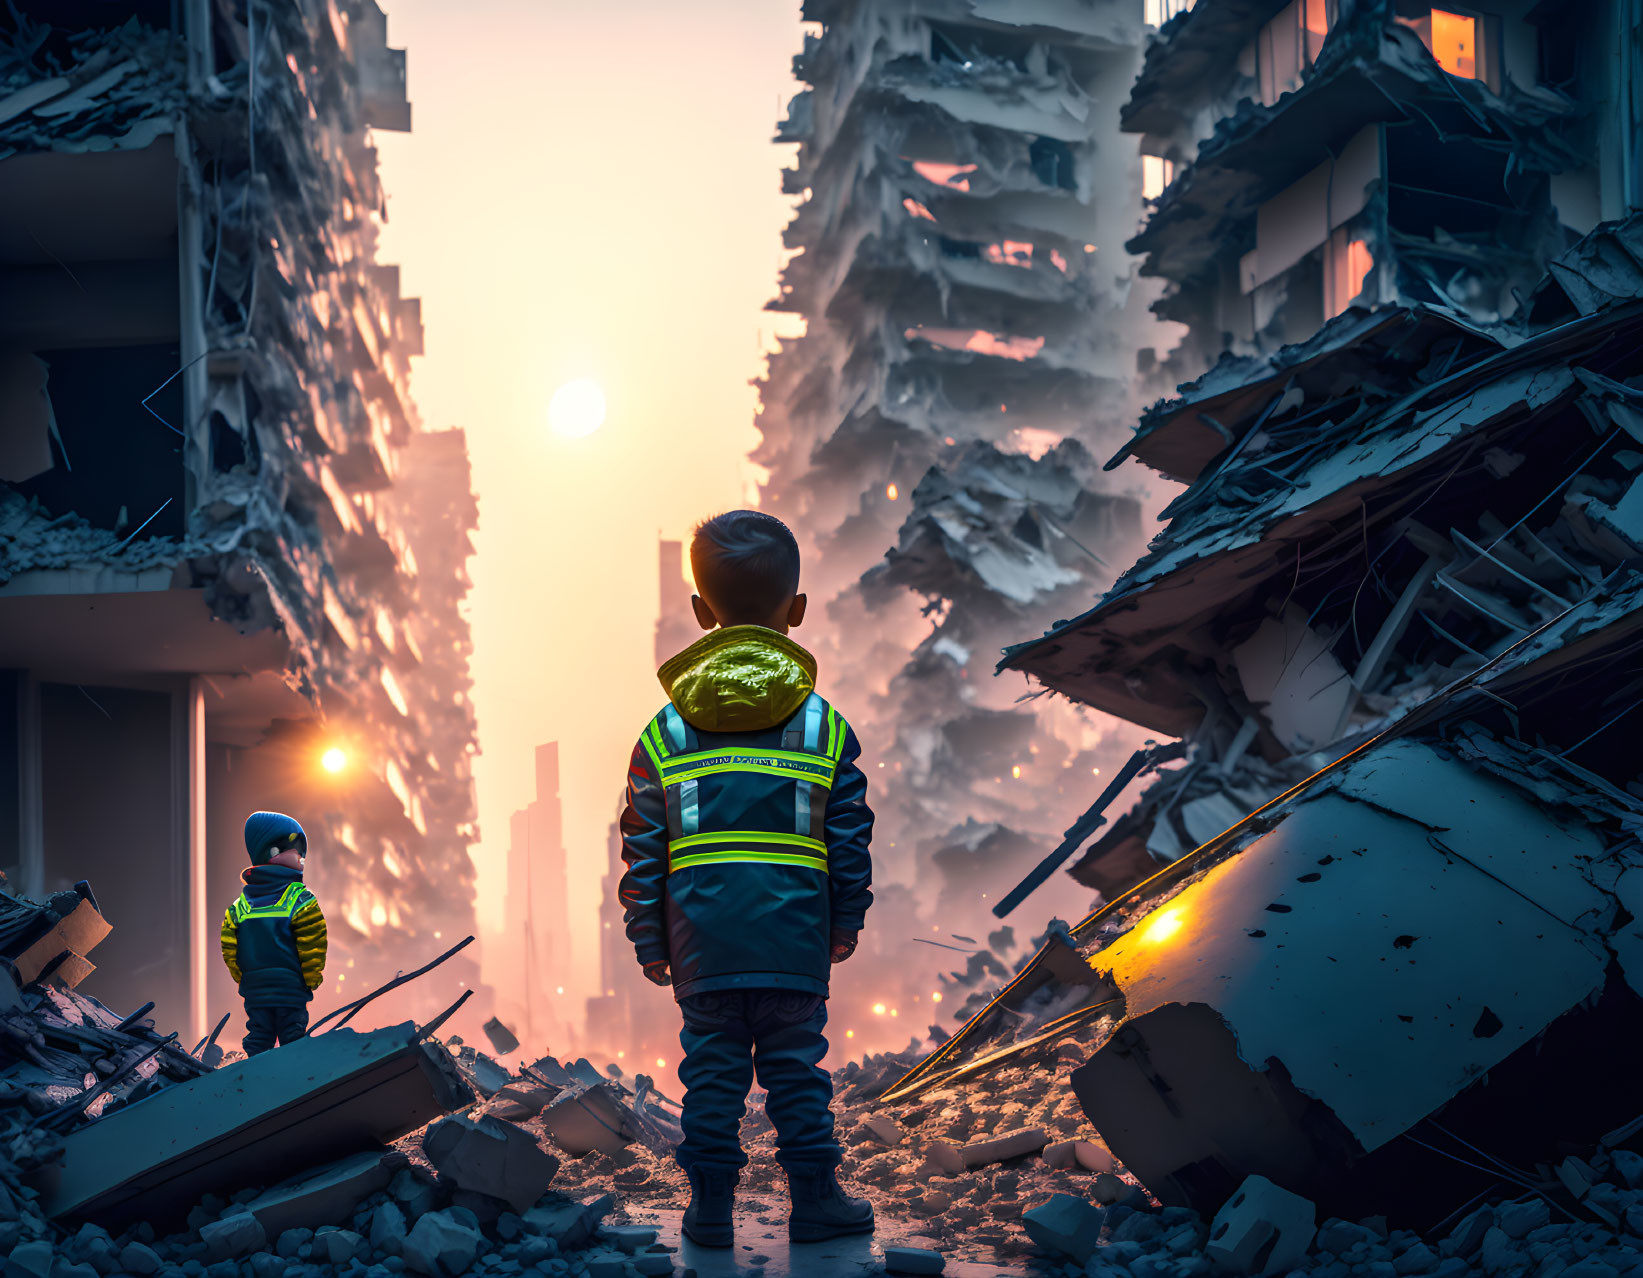 Child amidst devastation gazes at burnt-orange sky and crumbling buildings.